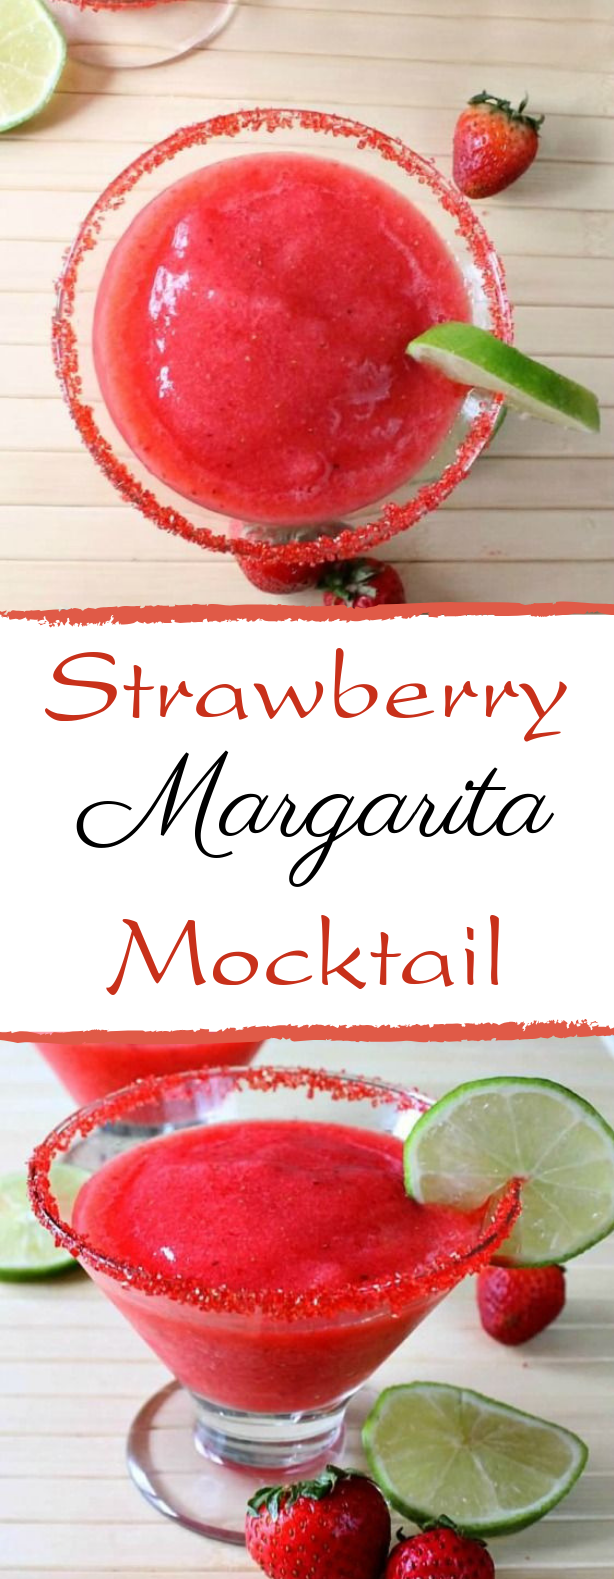 Strawberry Margarita Mocktail #cocktail #drinks